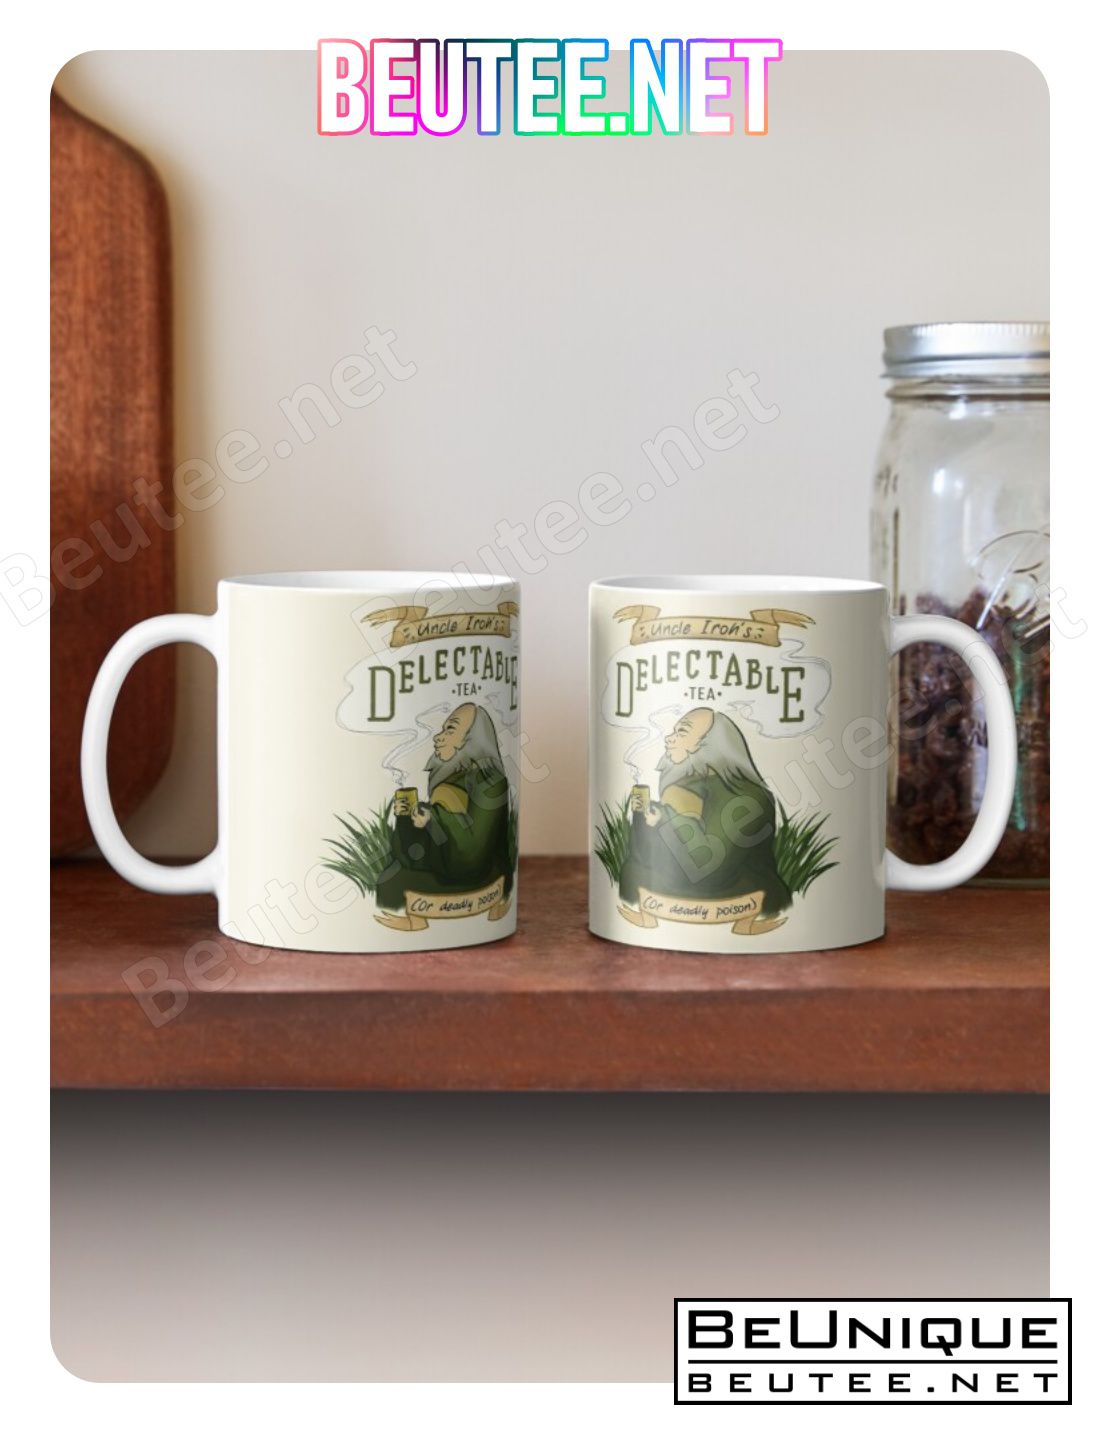 Iroh's Delectable Tea Coffee Mug